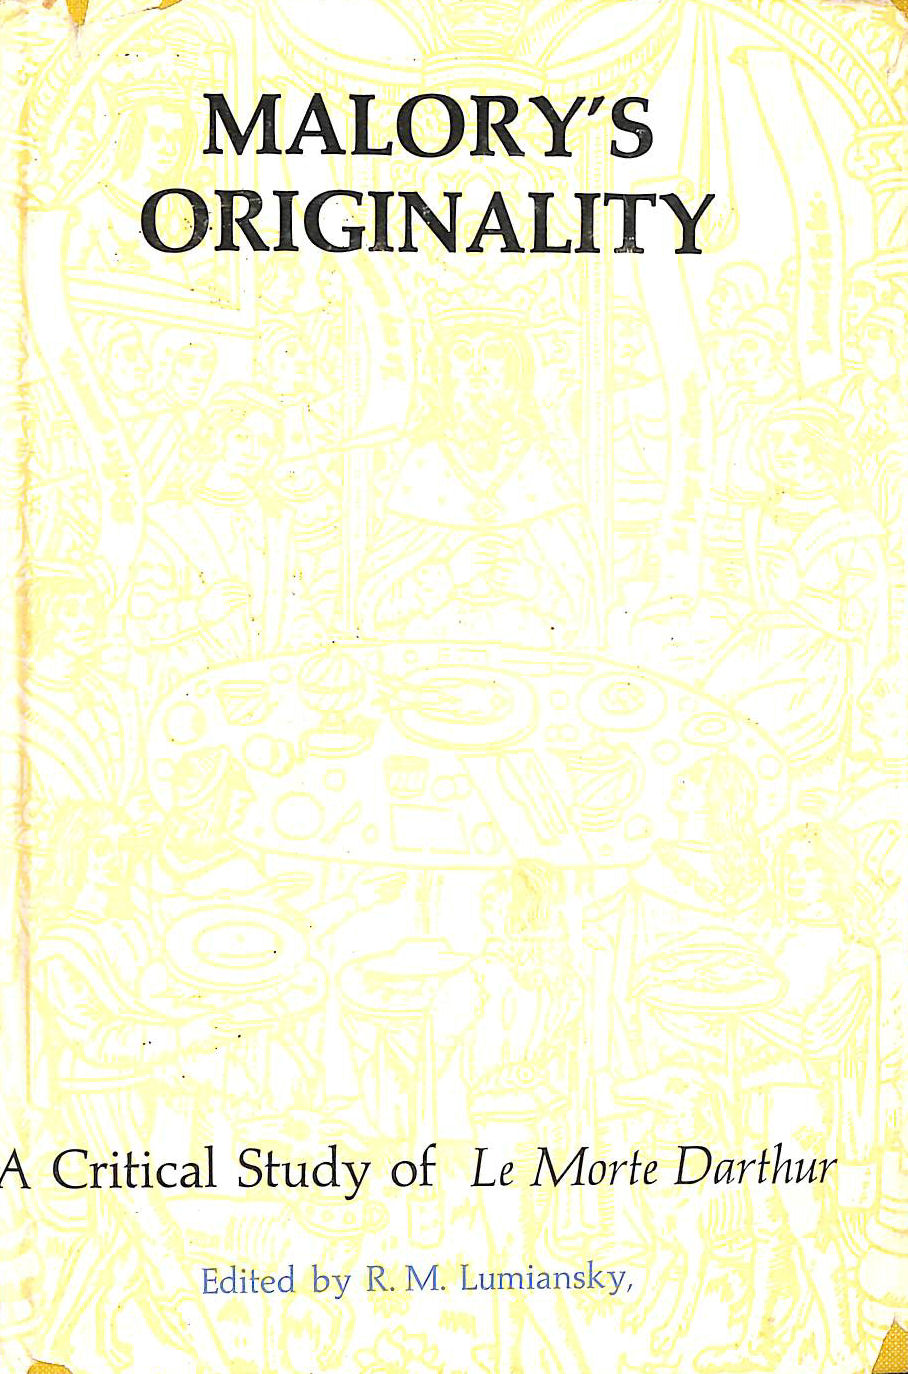 R M LUMIANSKY - Malory's Originality: A Critical Study of Le Morte d'Arthur